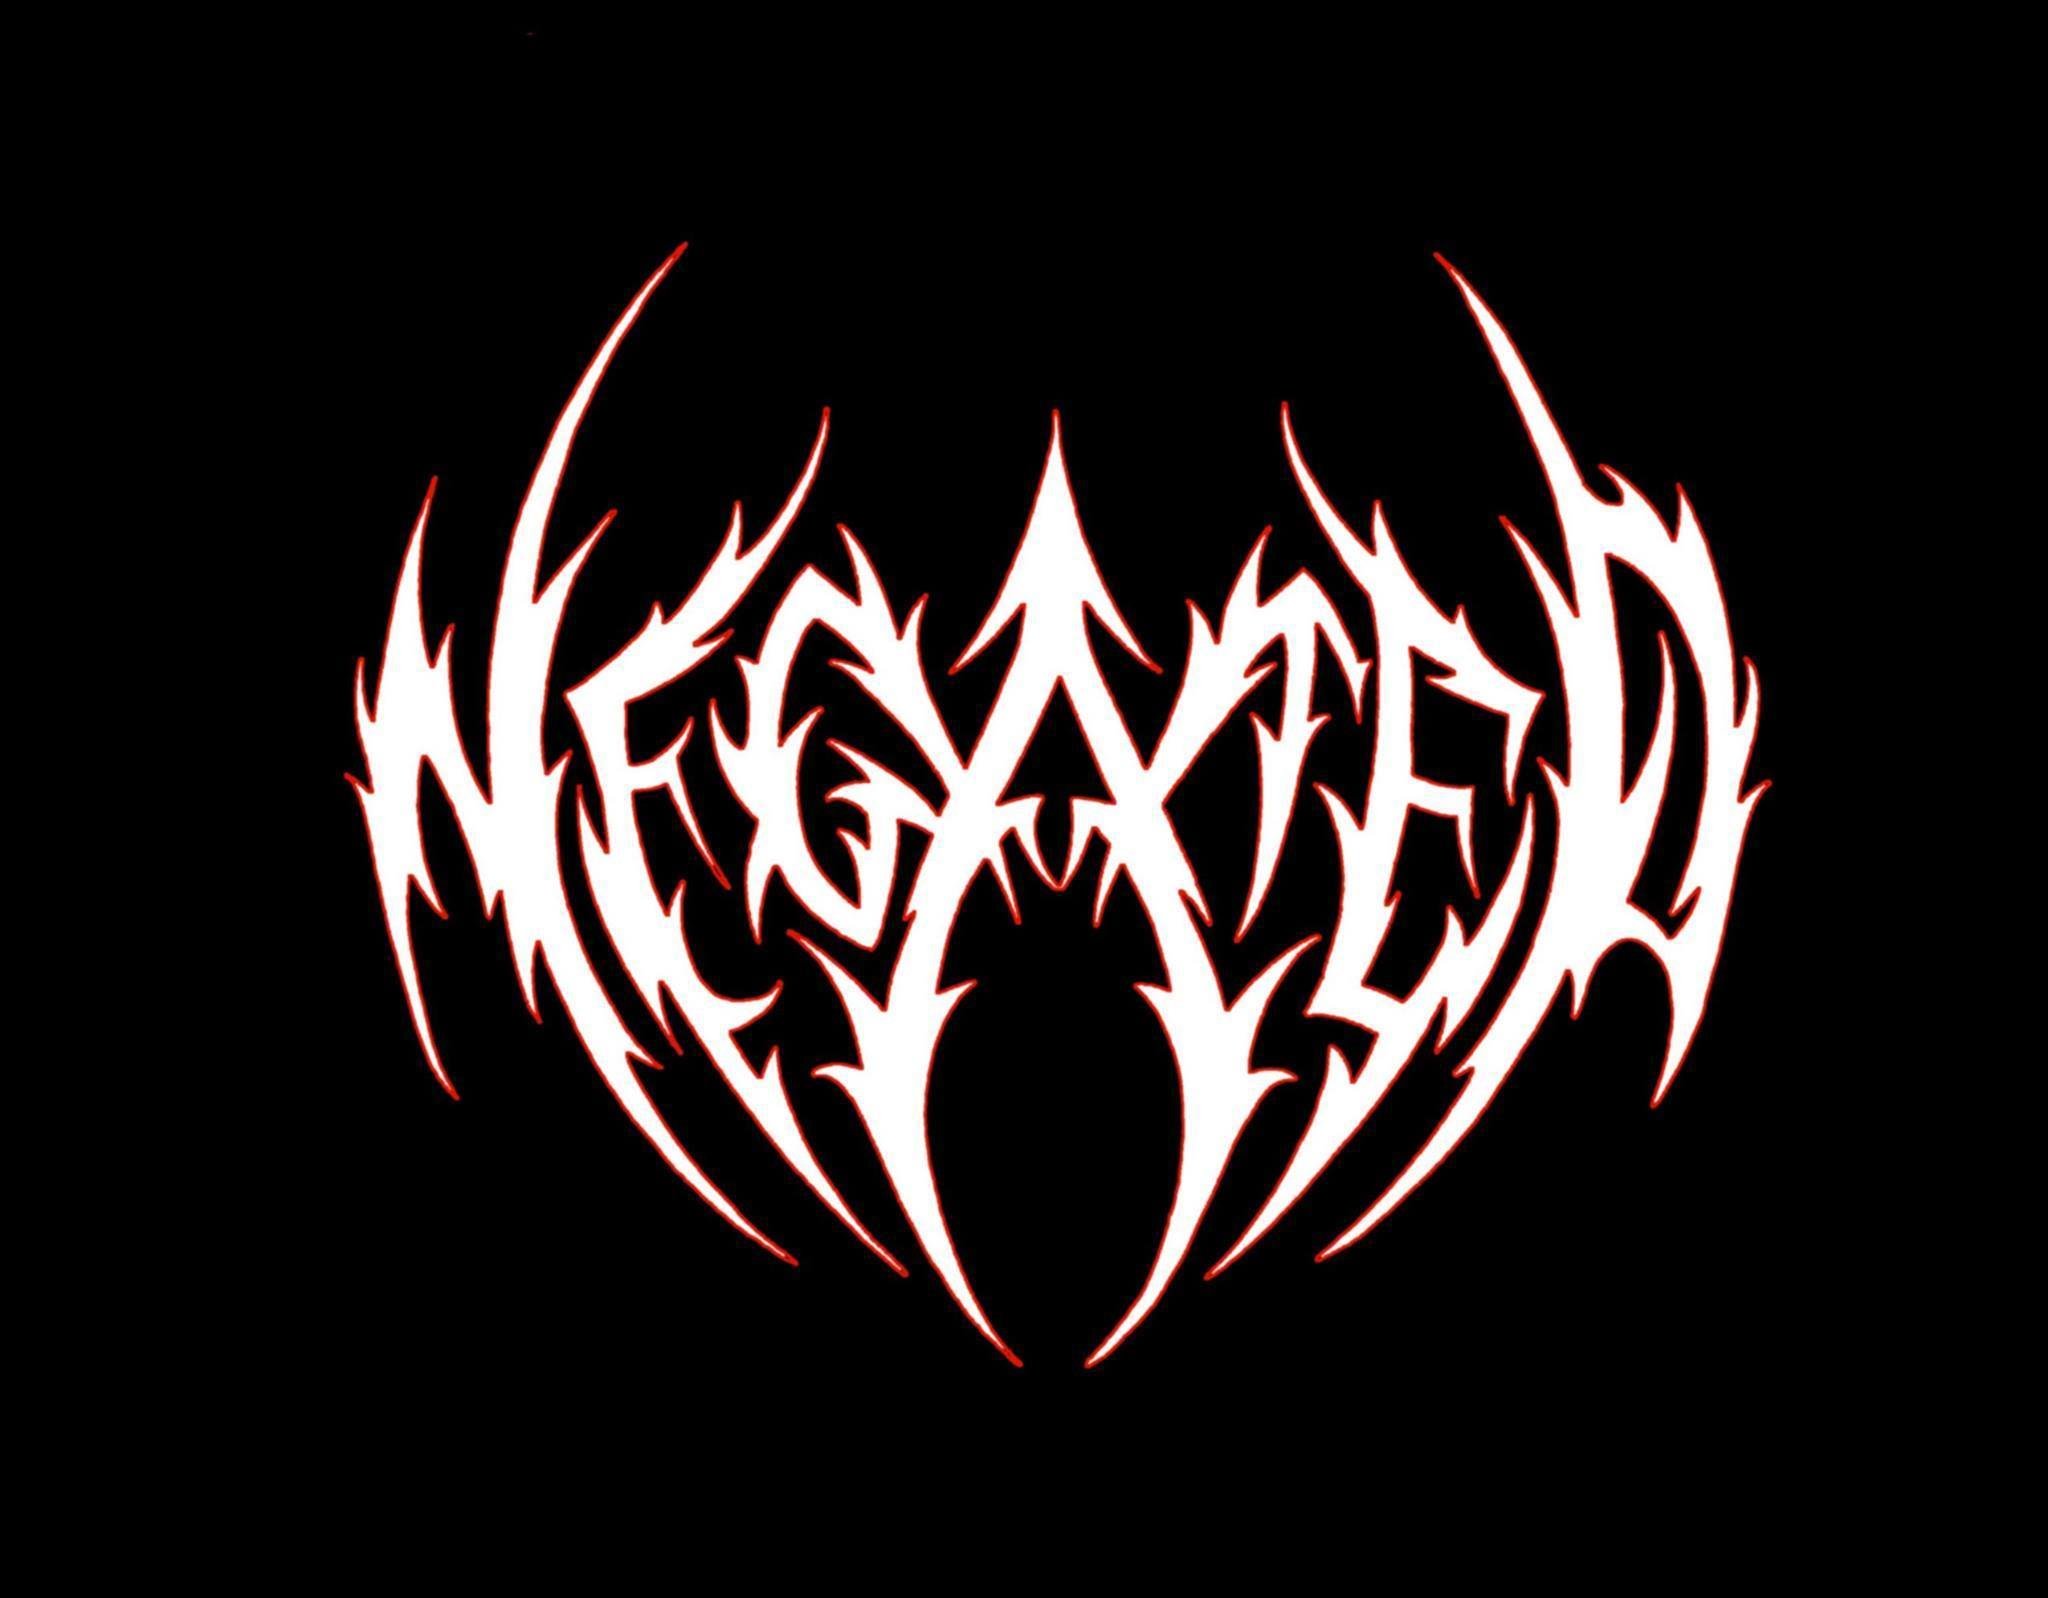 Negated | ReverbNation